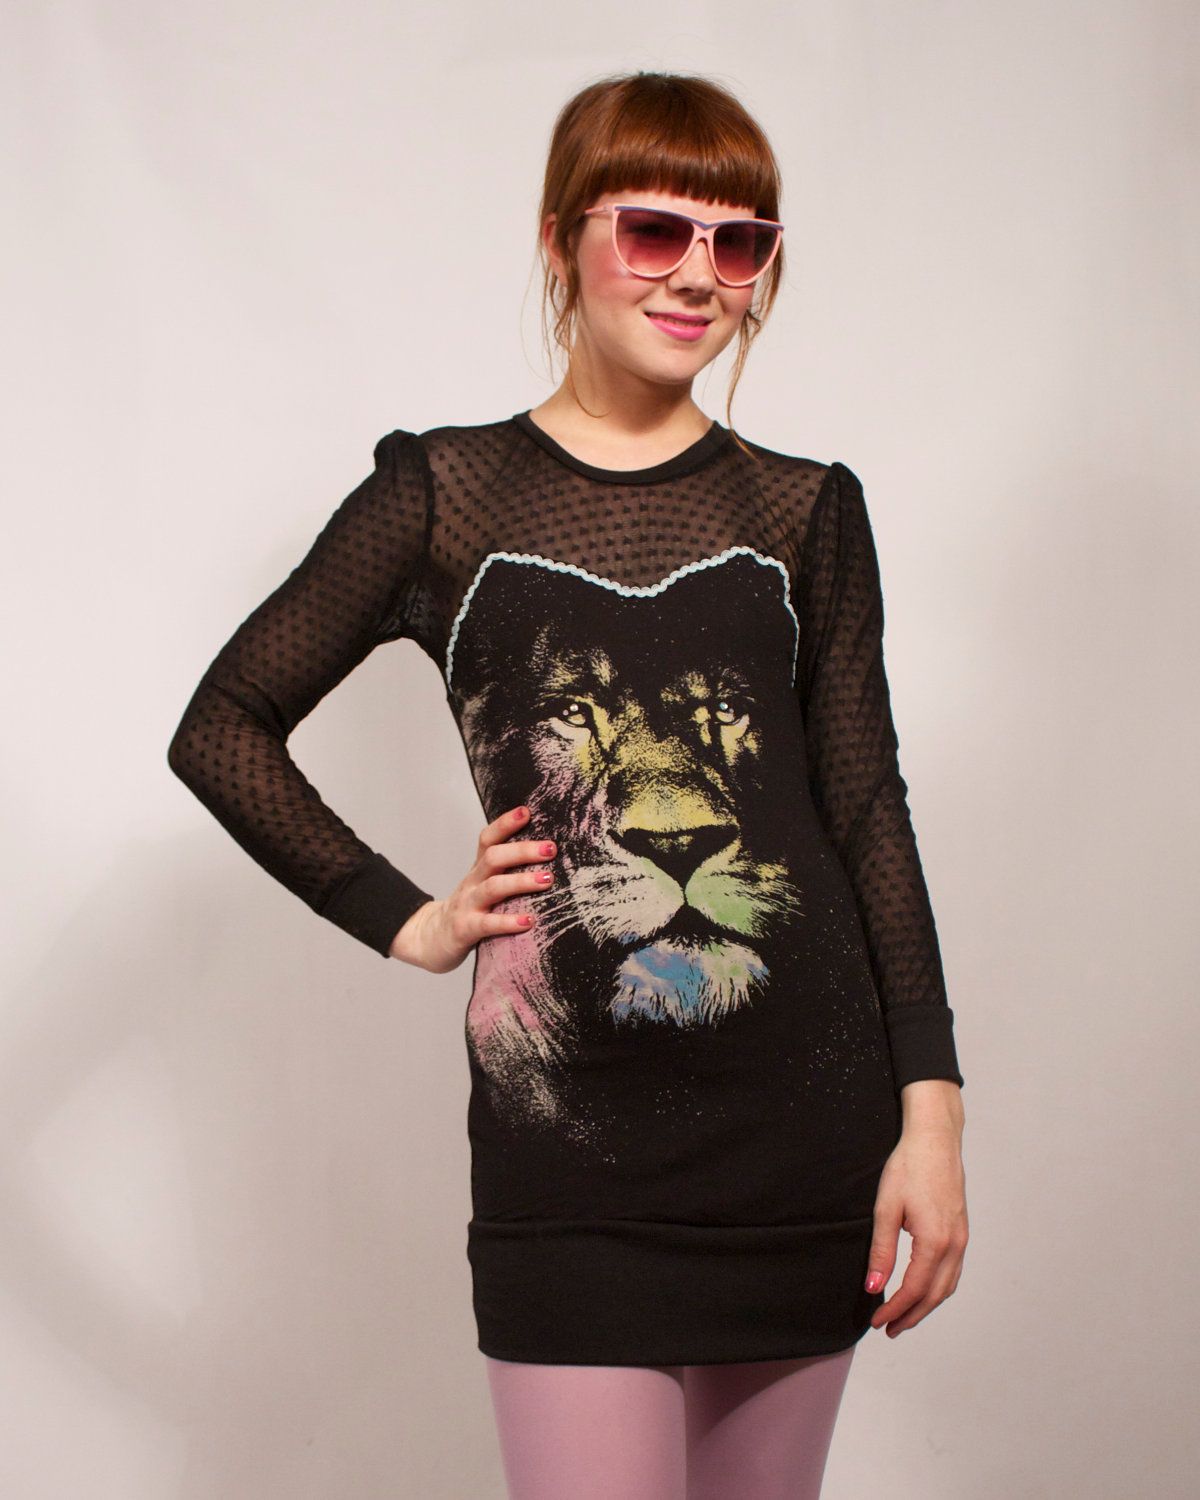 Animal Print Outfit - The Fashion Tag Blog